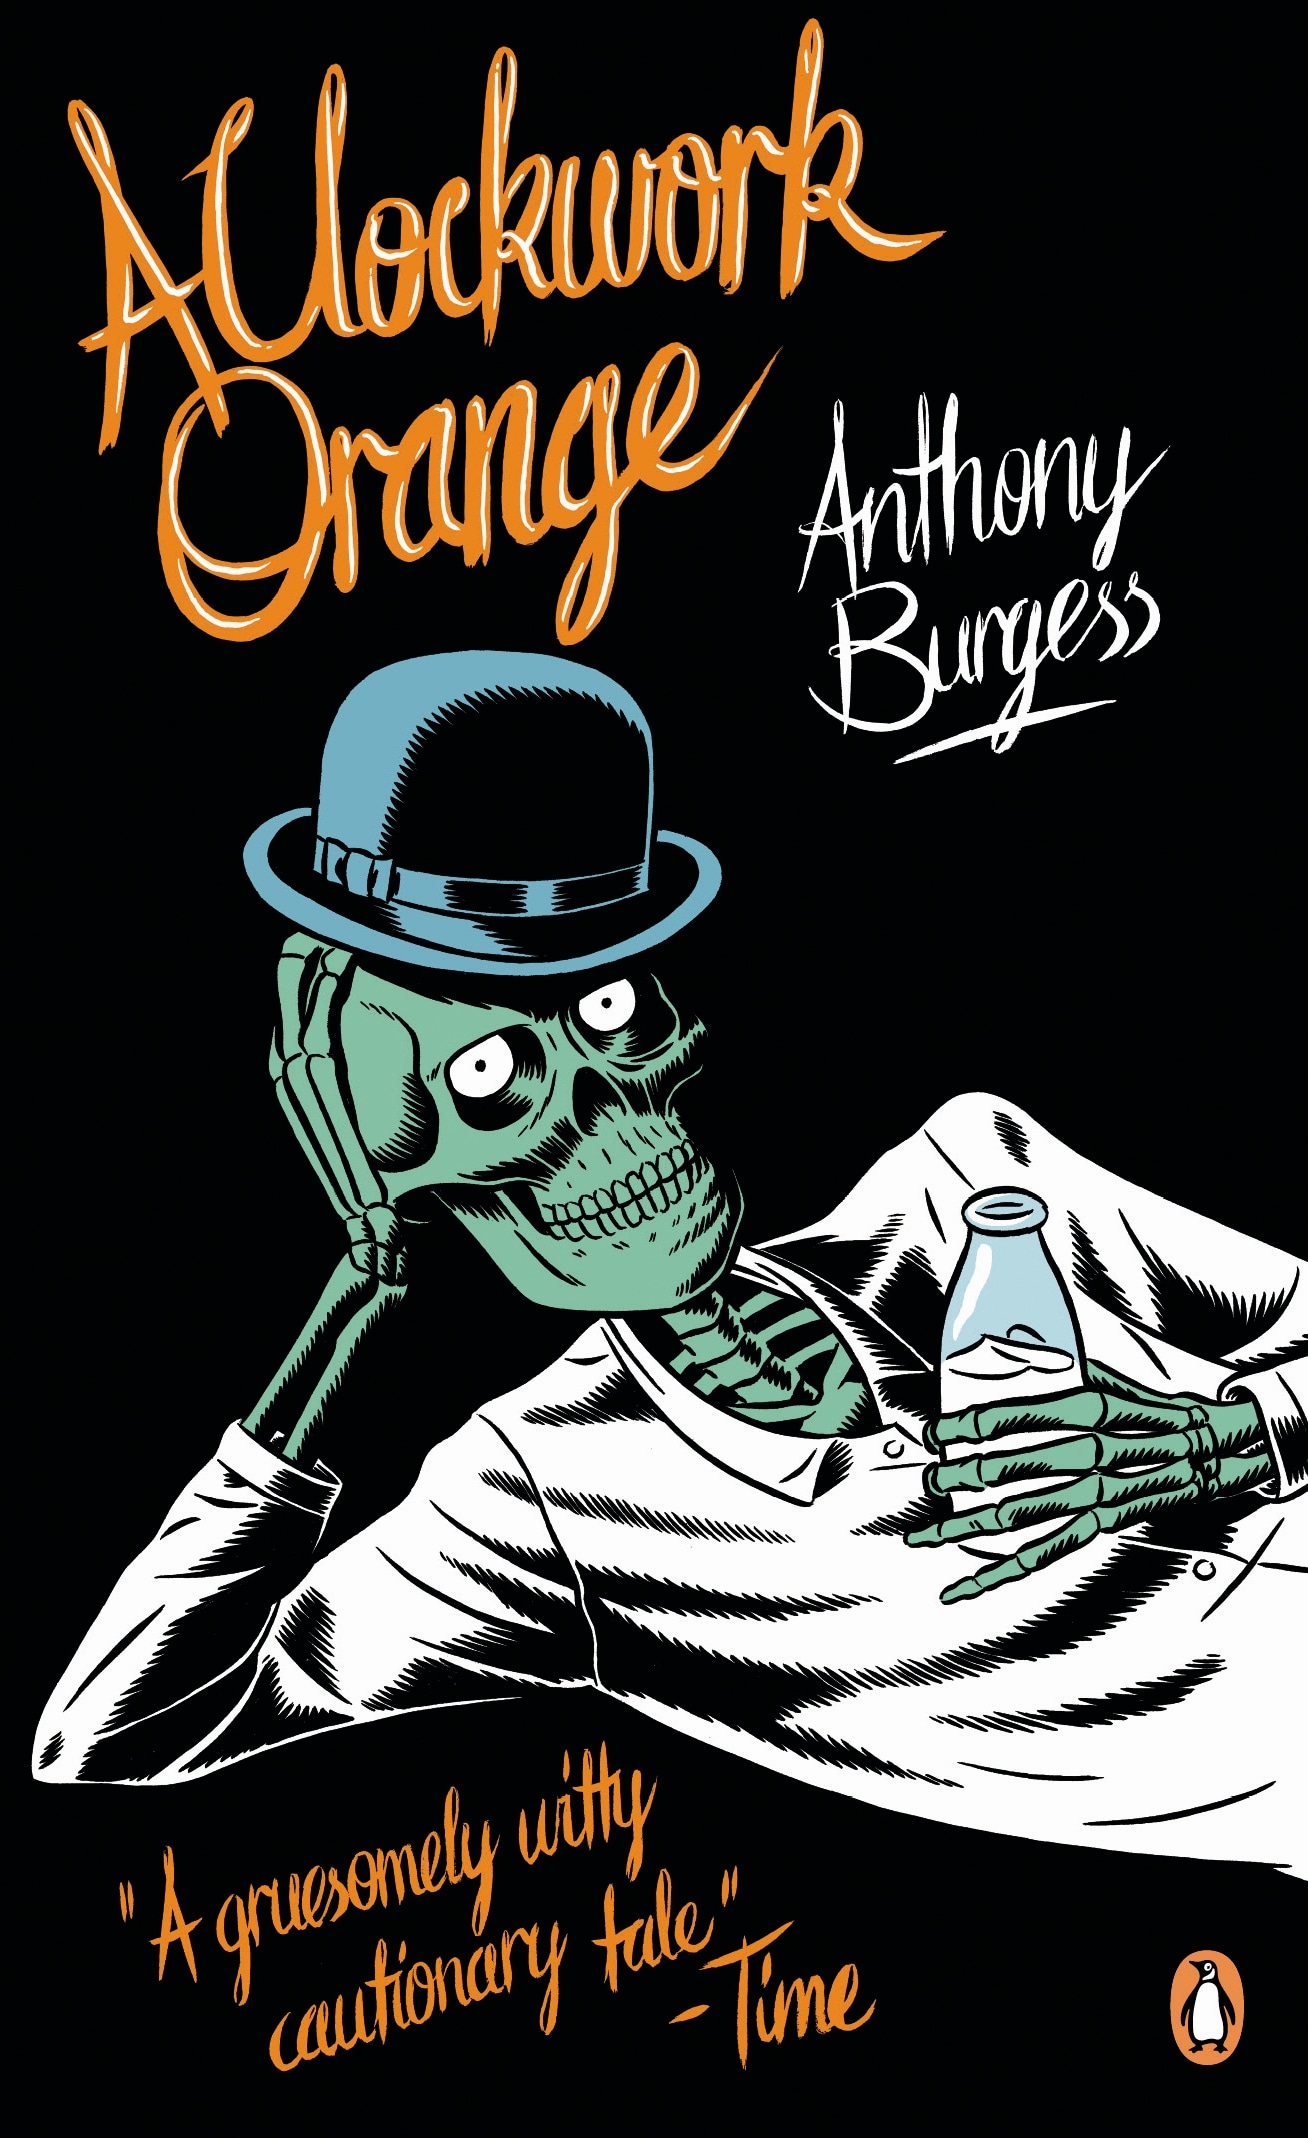 Book “A Clockwork Orange” by Anthony Burgess — April 7, 2011